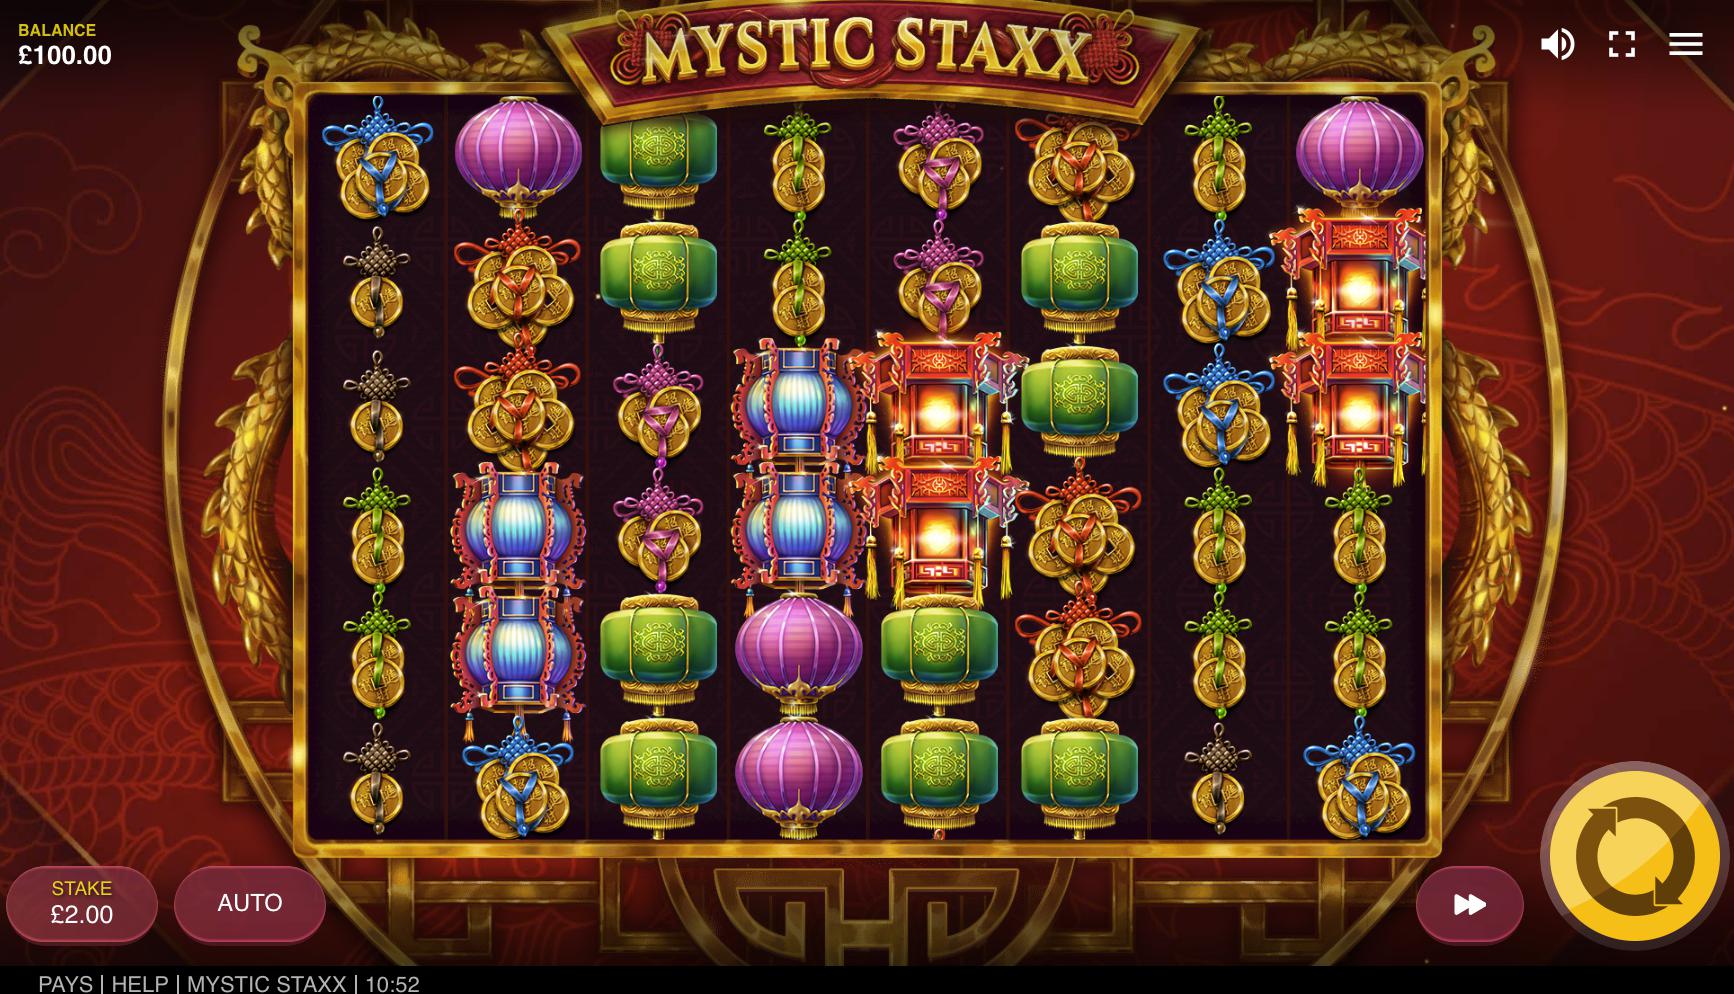 Mystic Staxx Slot